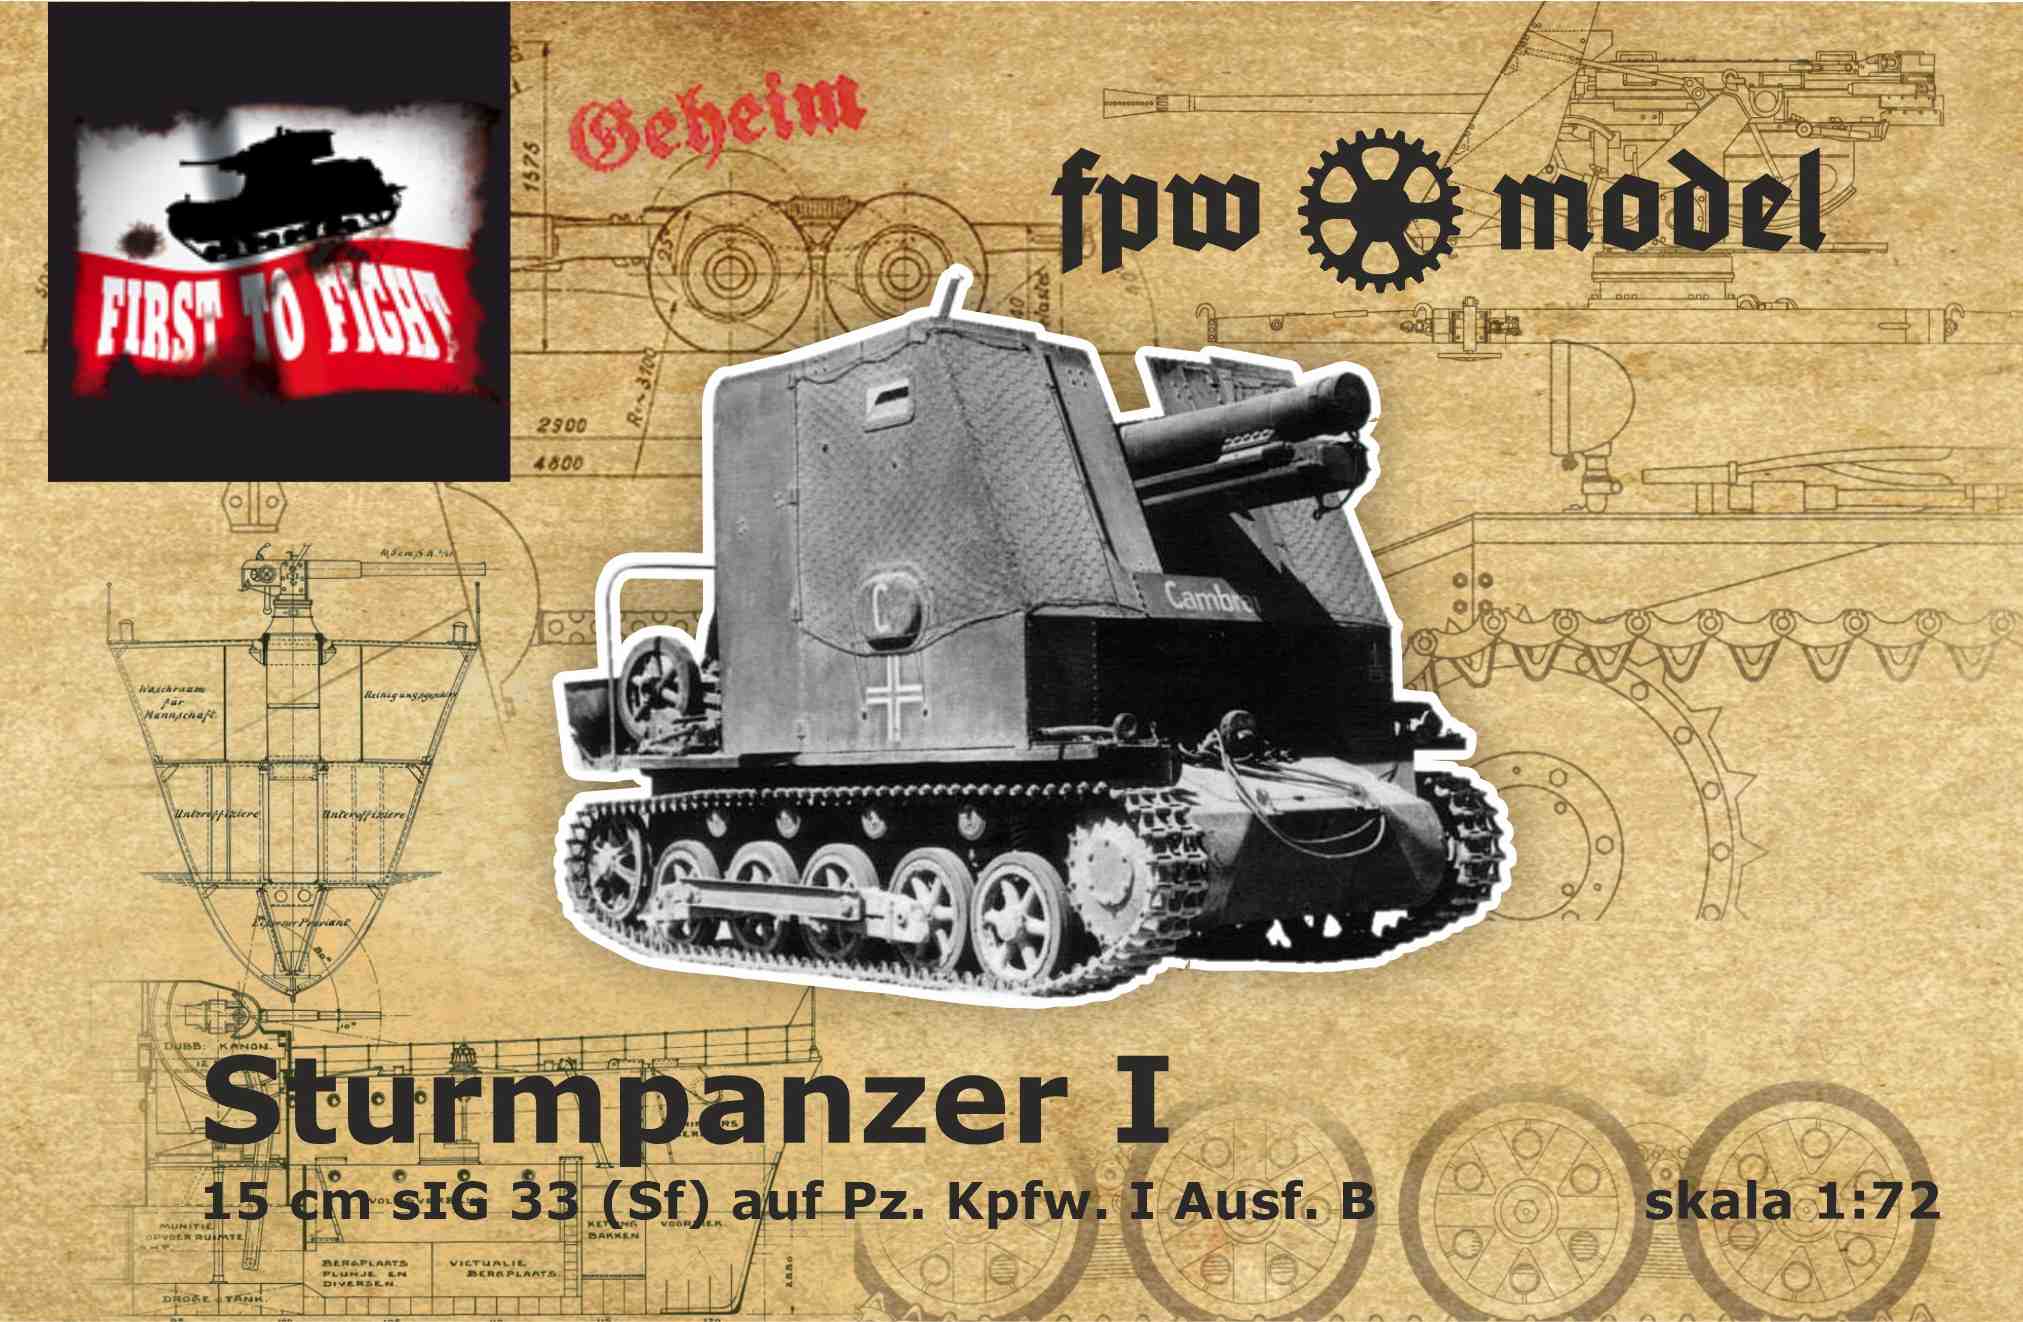 15cm sIG 33 (Sf) auf Pz.Kpfw.I Ausf.B Sturmpanzer I